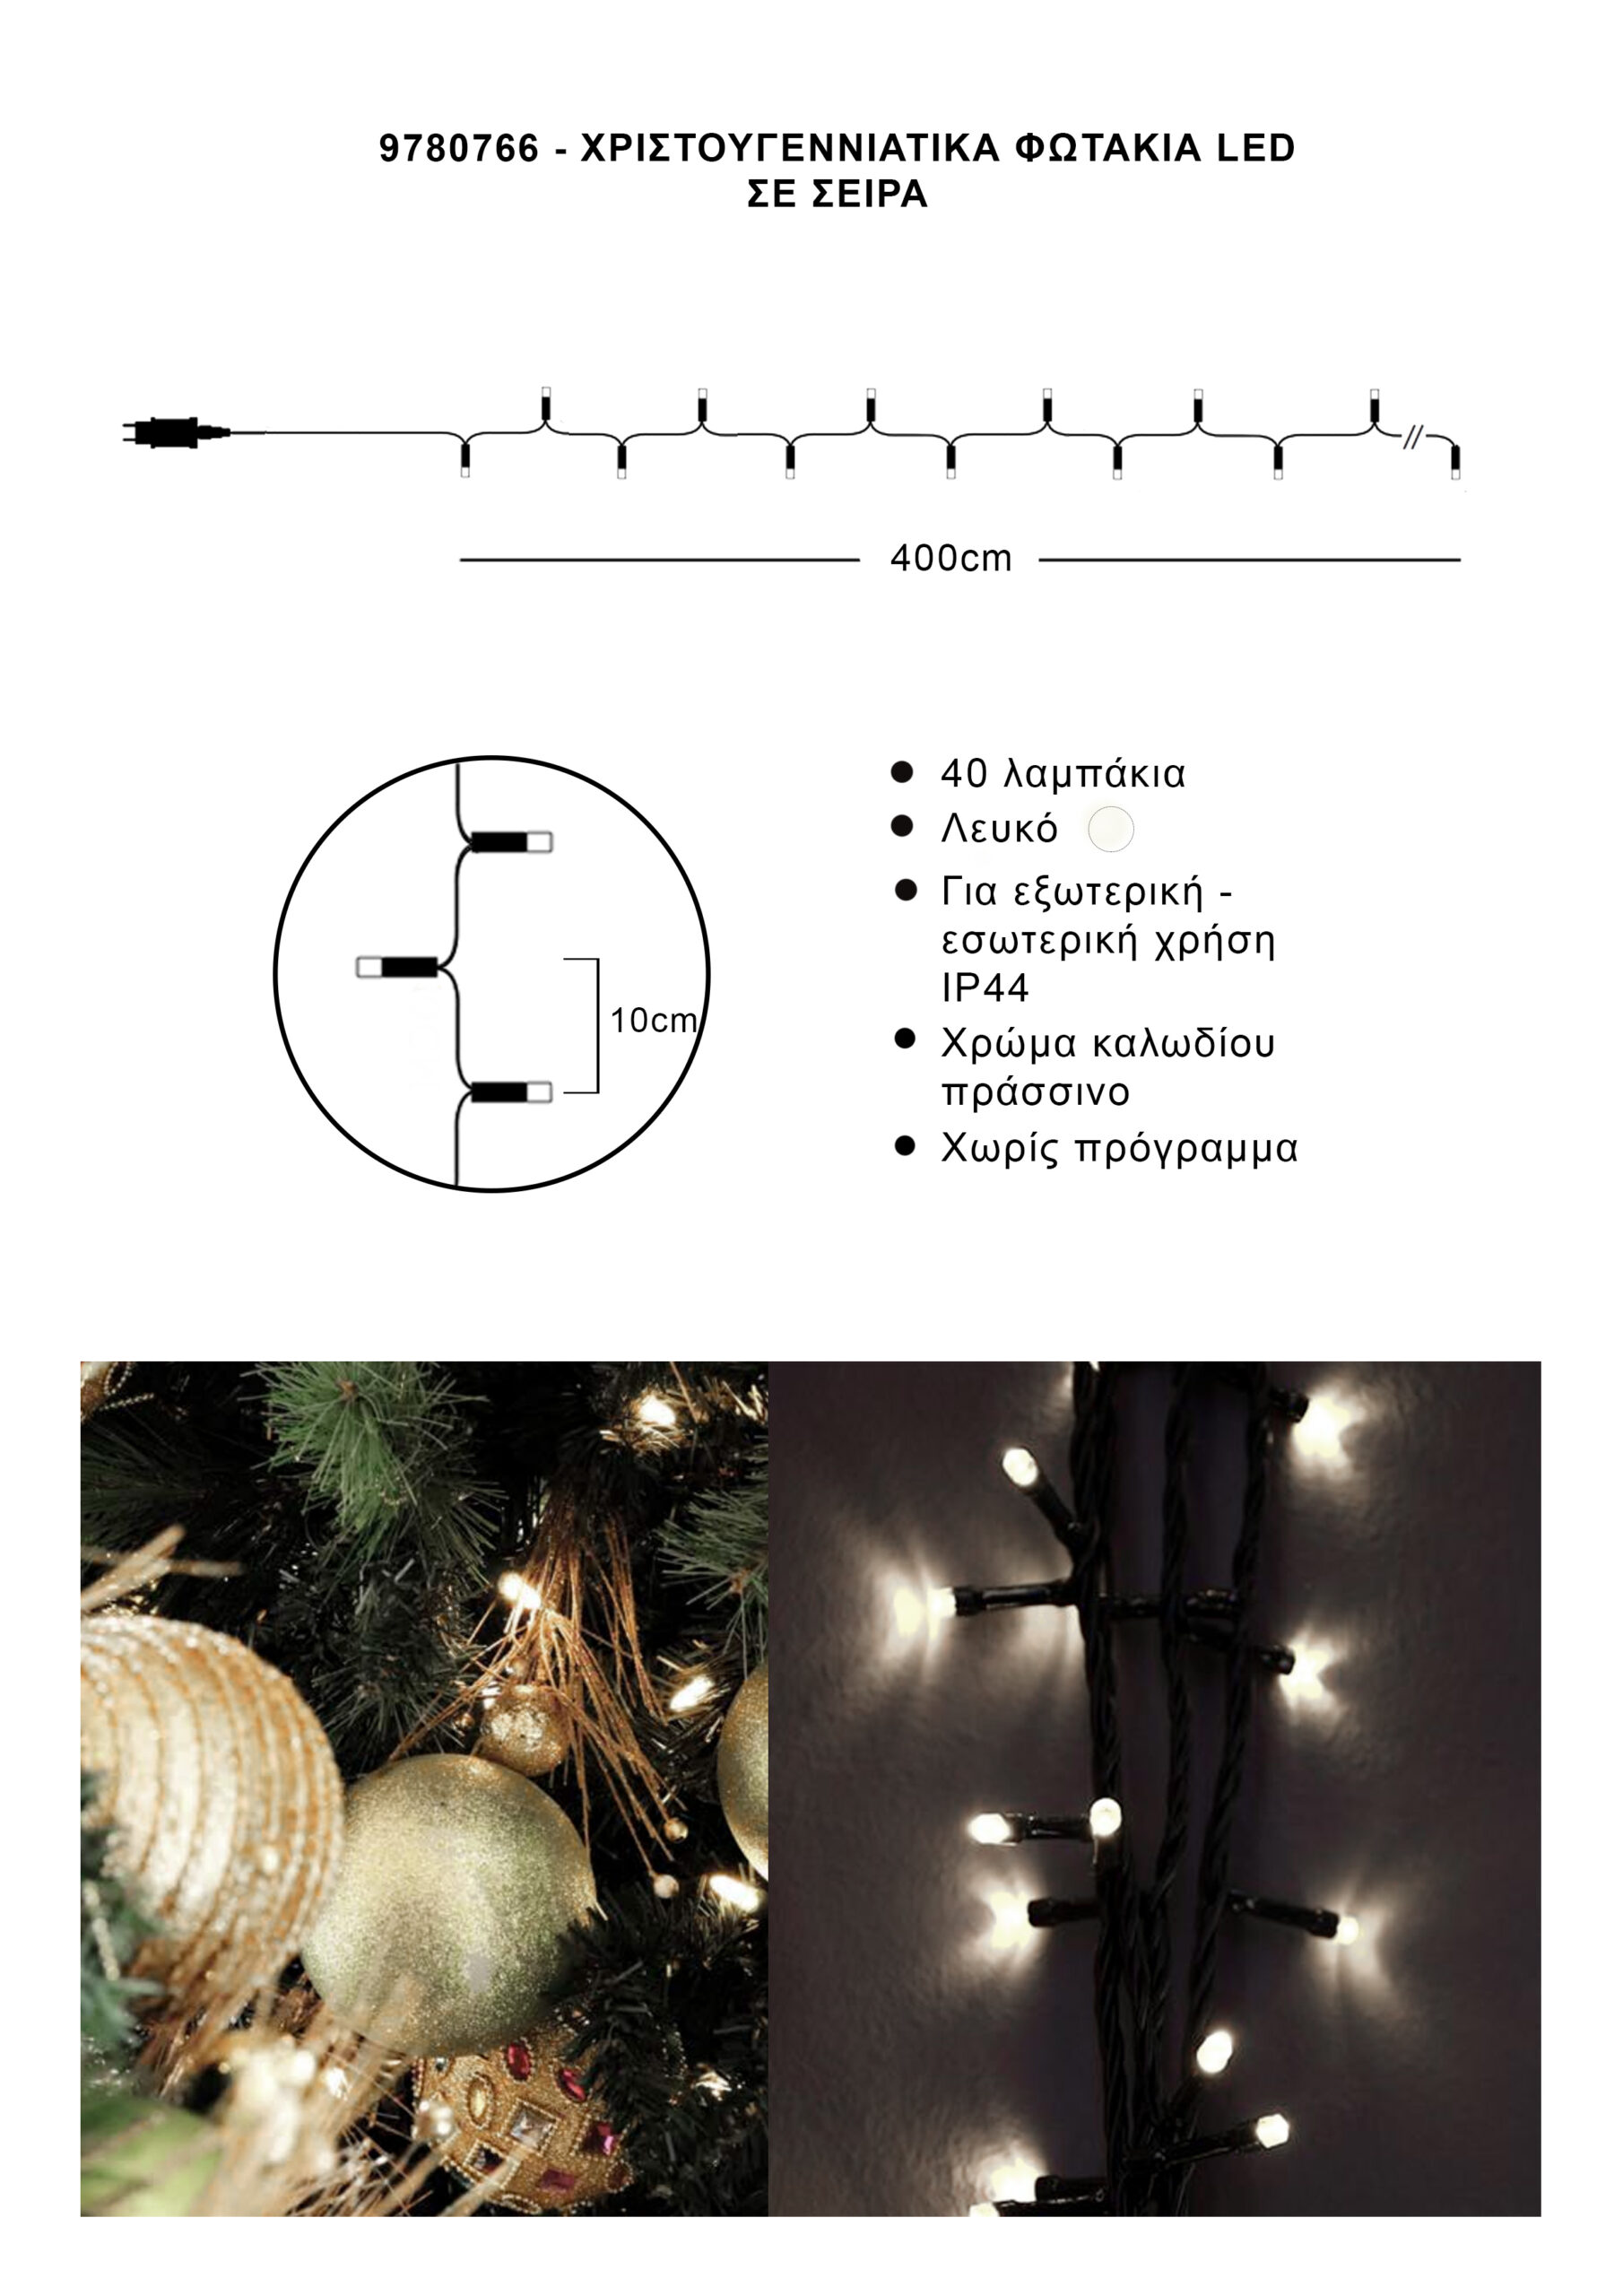 Athome Pavloudakis - Χριστουγεννιάτικα φωτάκια σε σειρά 40 LED λευκό σταθερό μ 400 cm